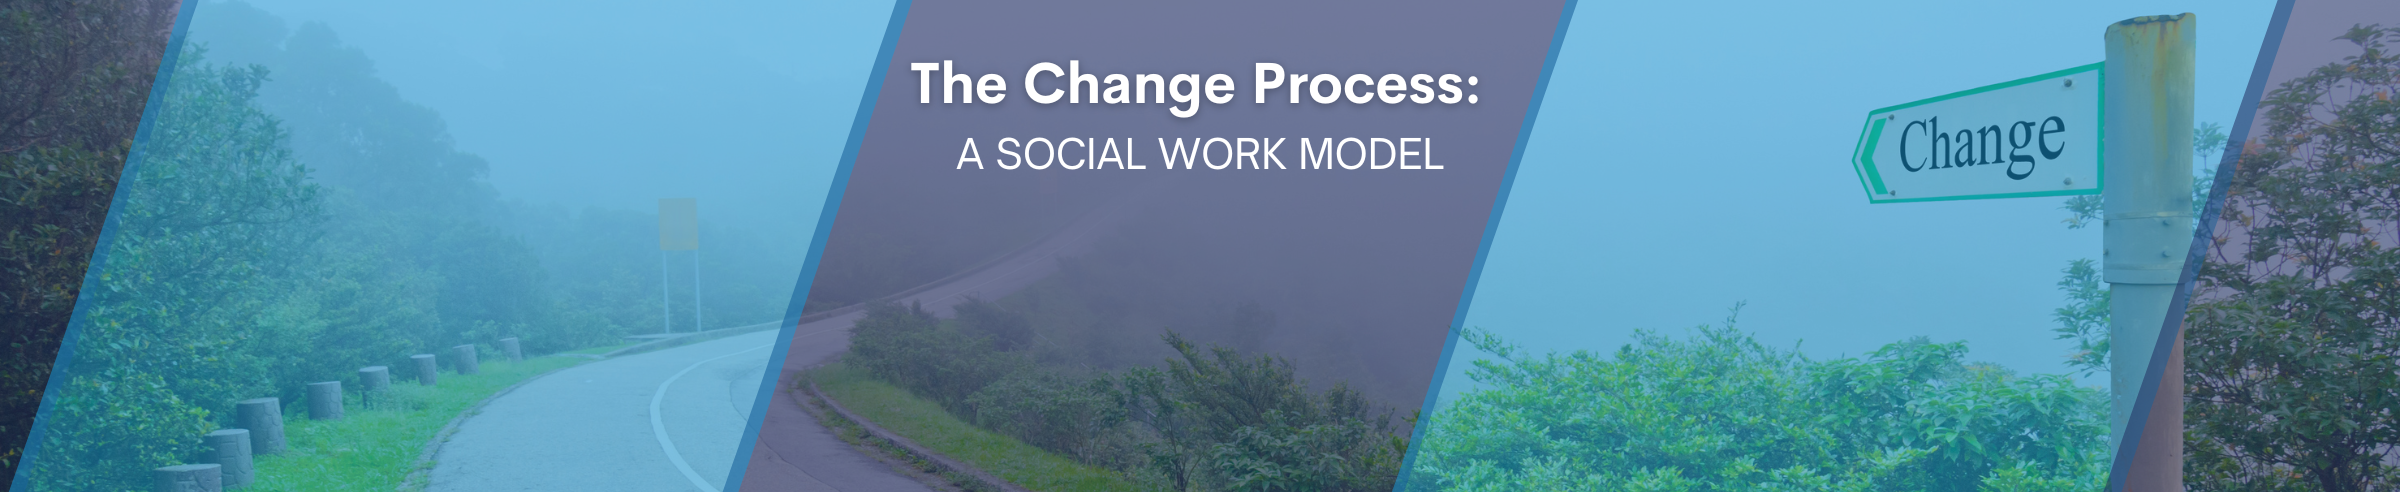 The Change Process: A Social Work Model